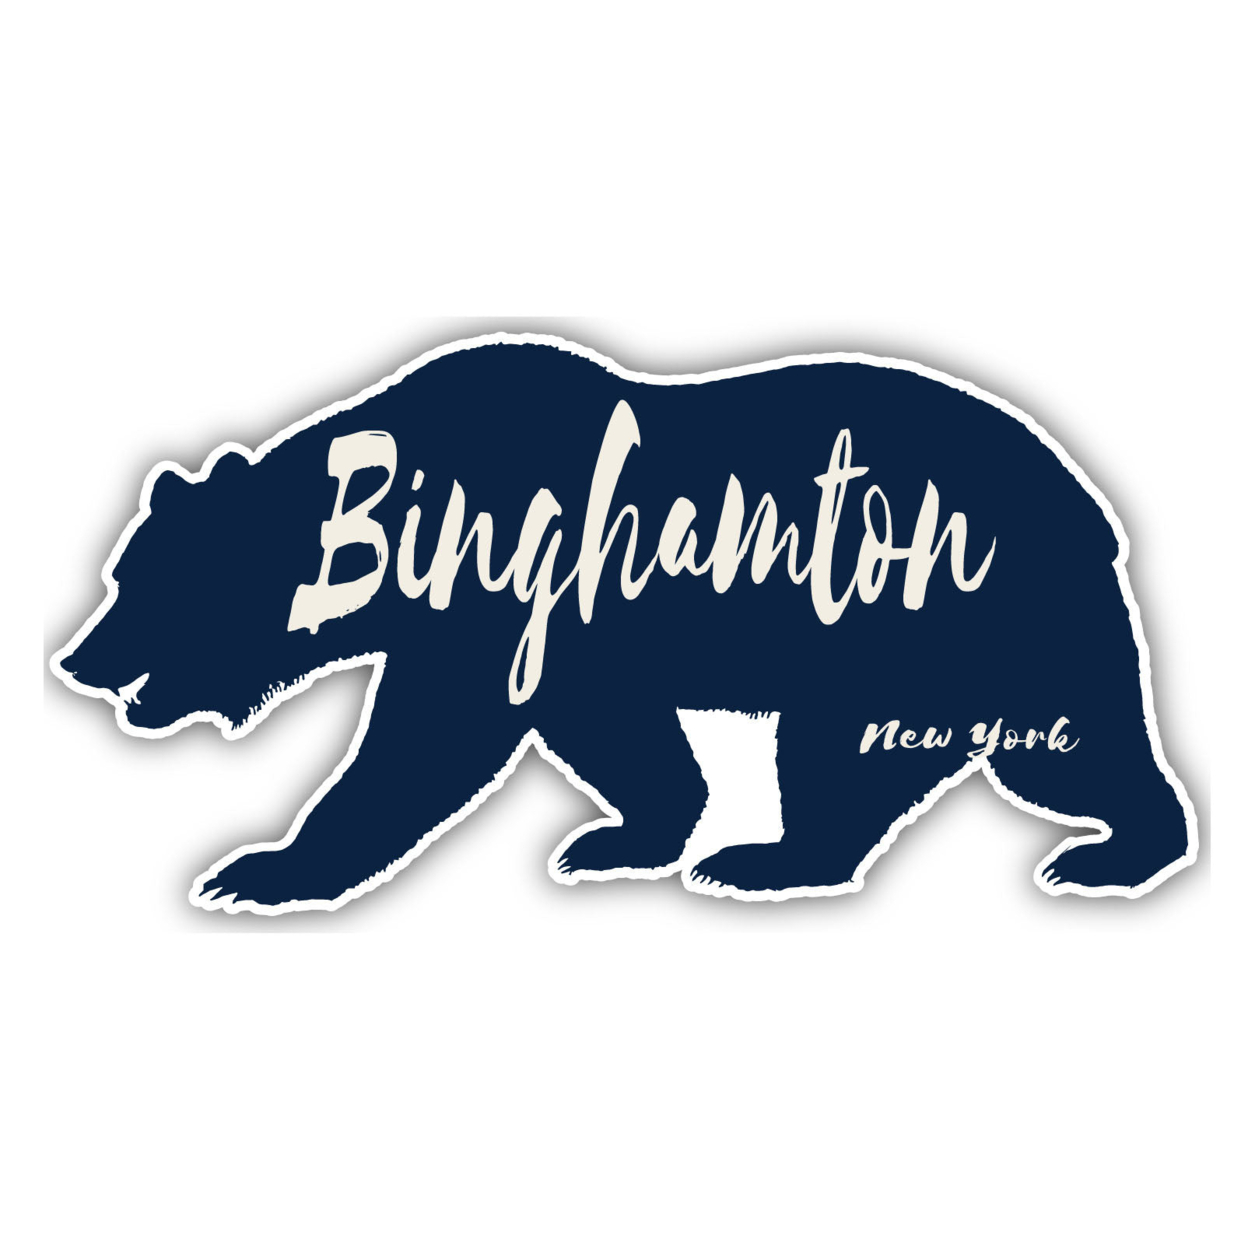 Binghamton New York Souvenir Decorative Stickers (Choose Theme And Size) - Single Unit, 8-Inch, Bear